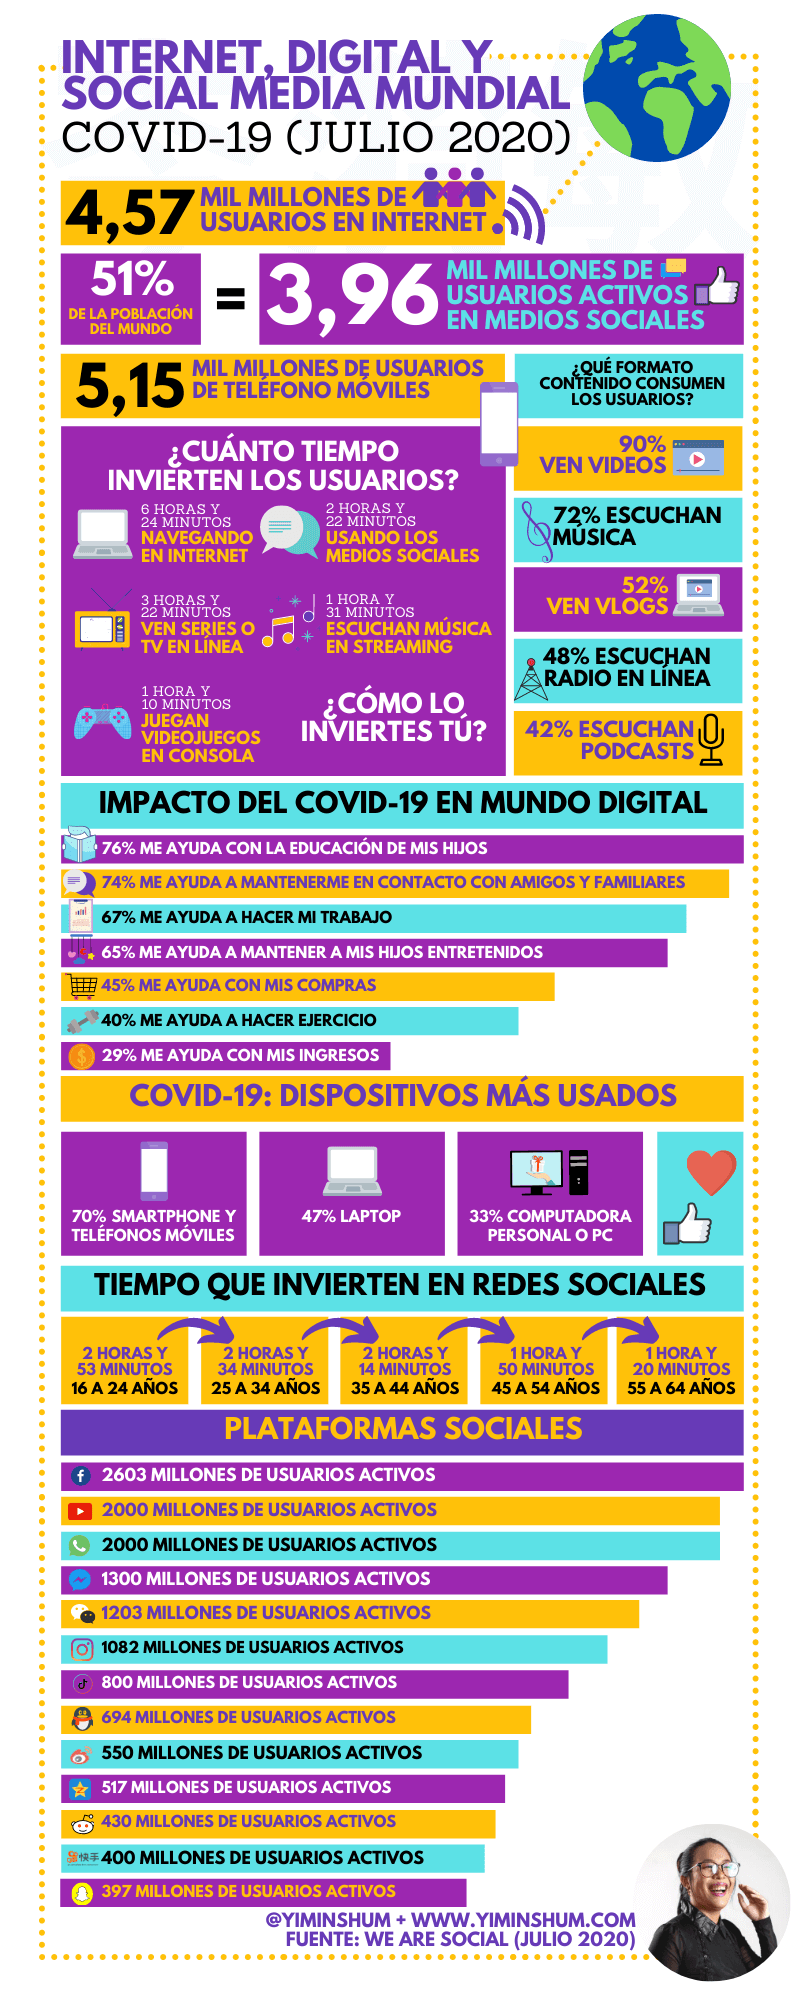 Mundo Digital Covid 19 2020 #infografia #infographic #socialmedia